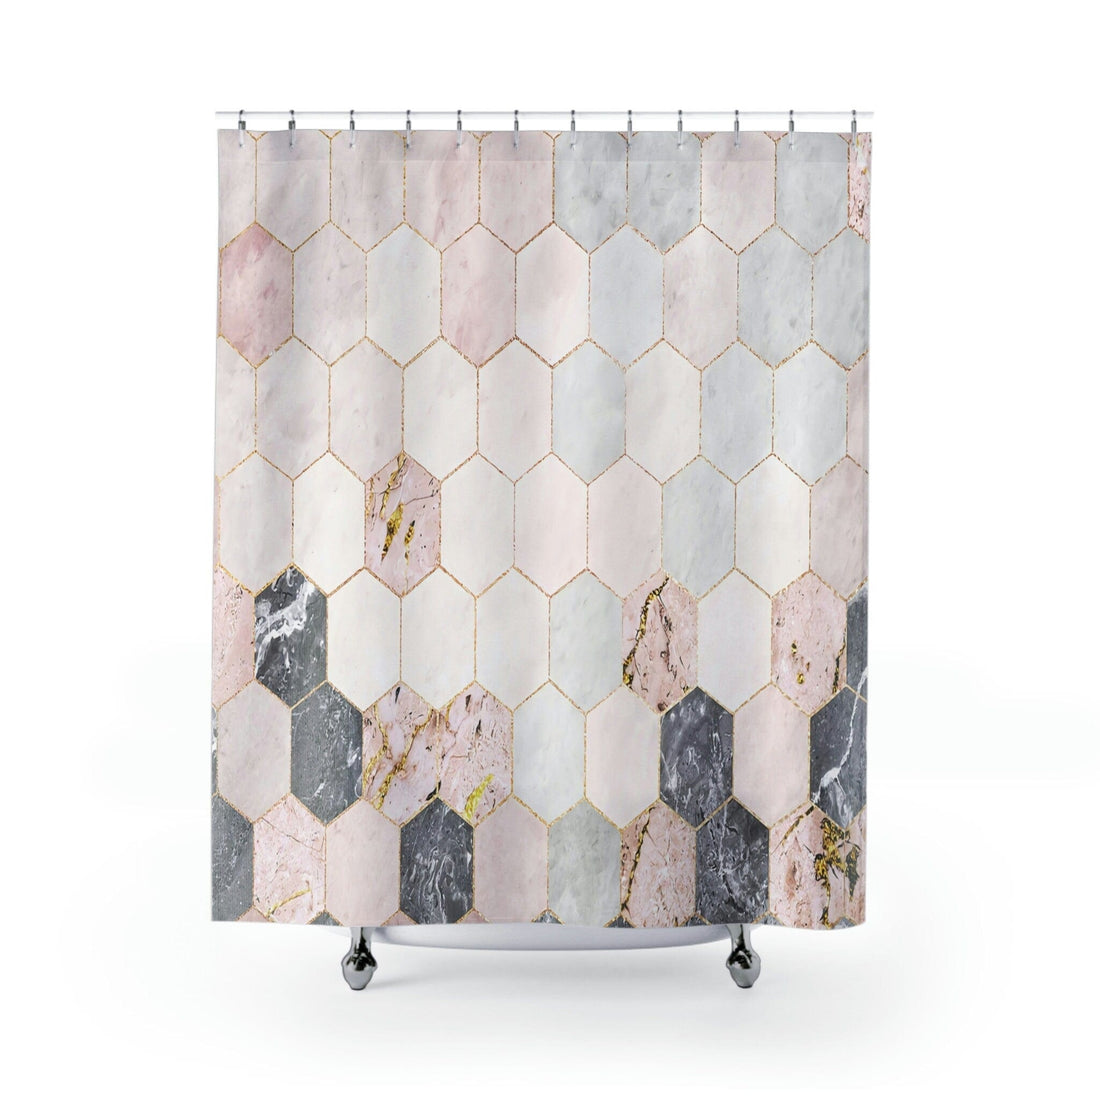 Kate McEnroe New York Modern Geometric Tiles Marble Print Shower Curtain, Stylish Bathroom Decor, Pink, Grey, Light Blue Marble Bath Curtains, Contemporary BathShower CurtainsSC - MAR - TIL - 7X7